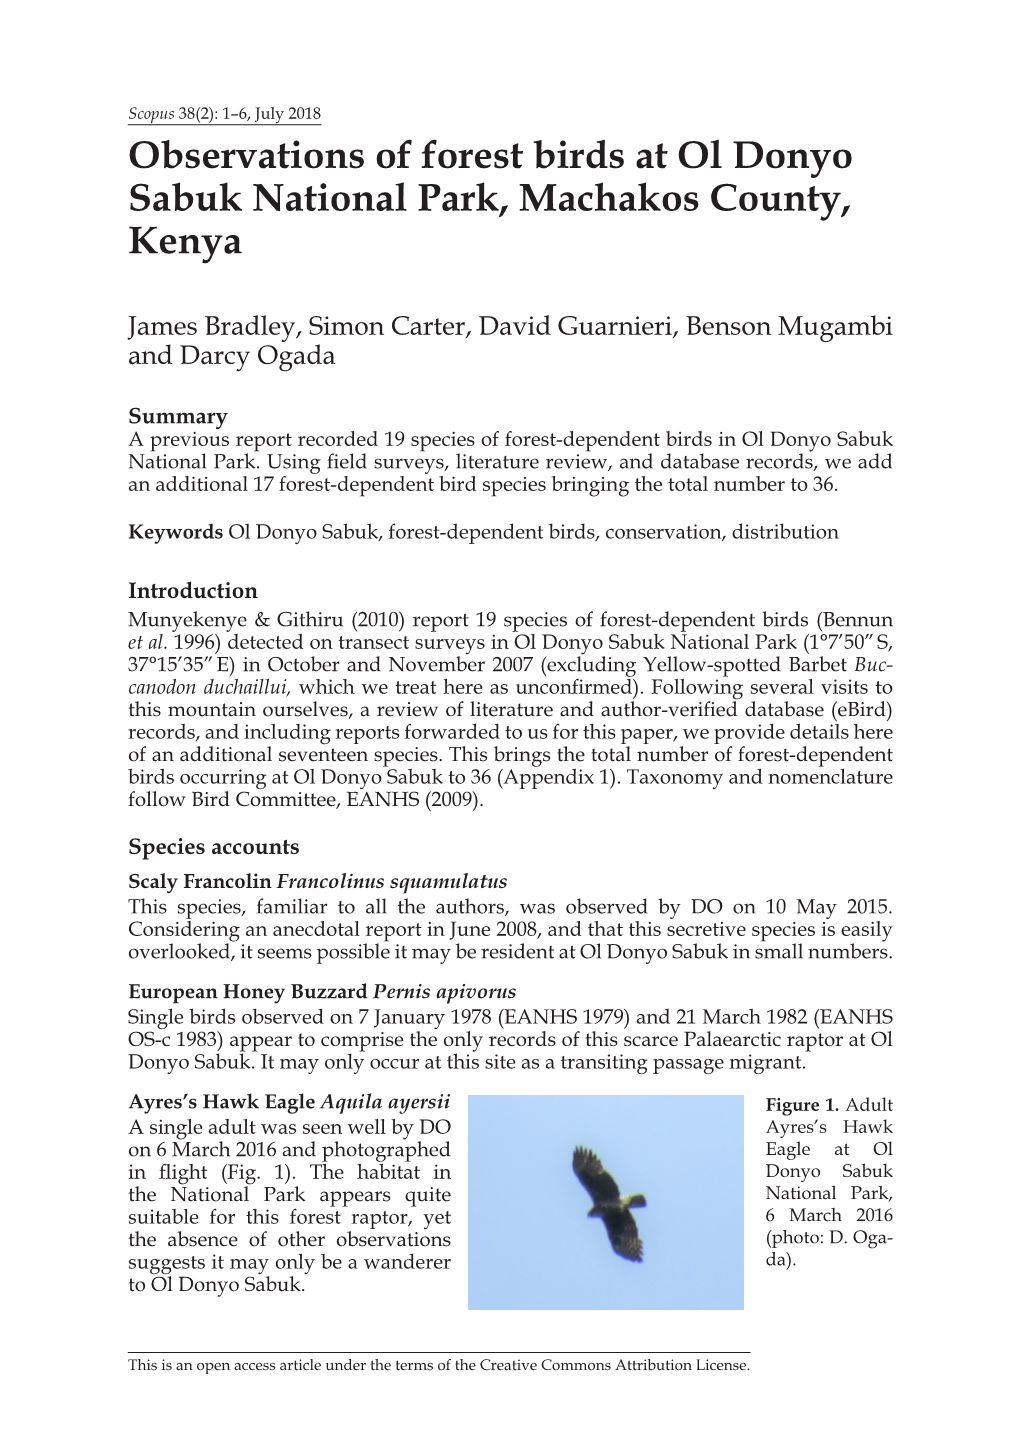 Observations of Forest Birds at Ol Donyo Sabuk National Park, Machakos County, Kenya